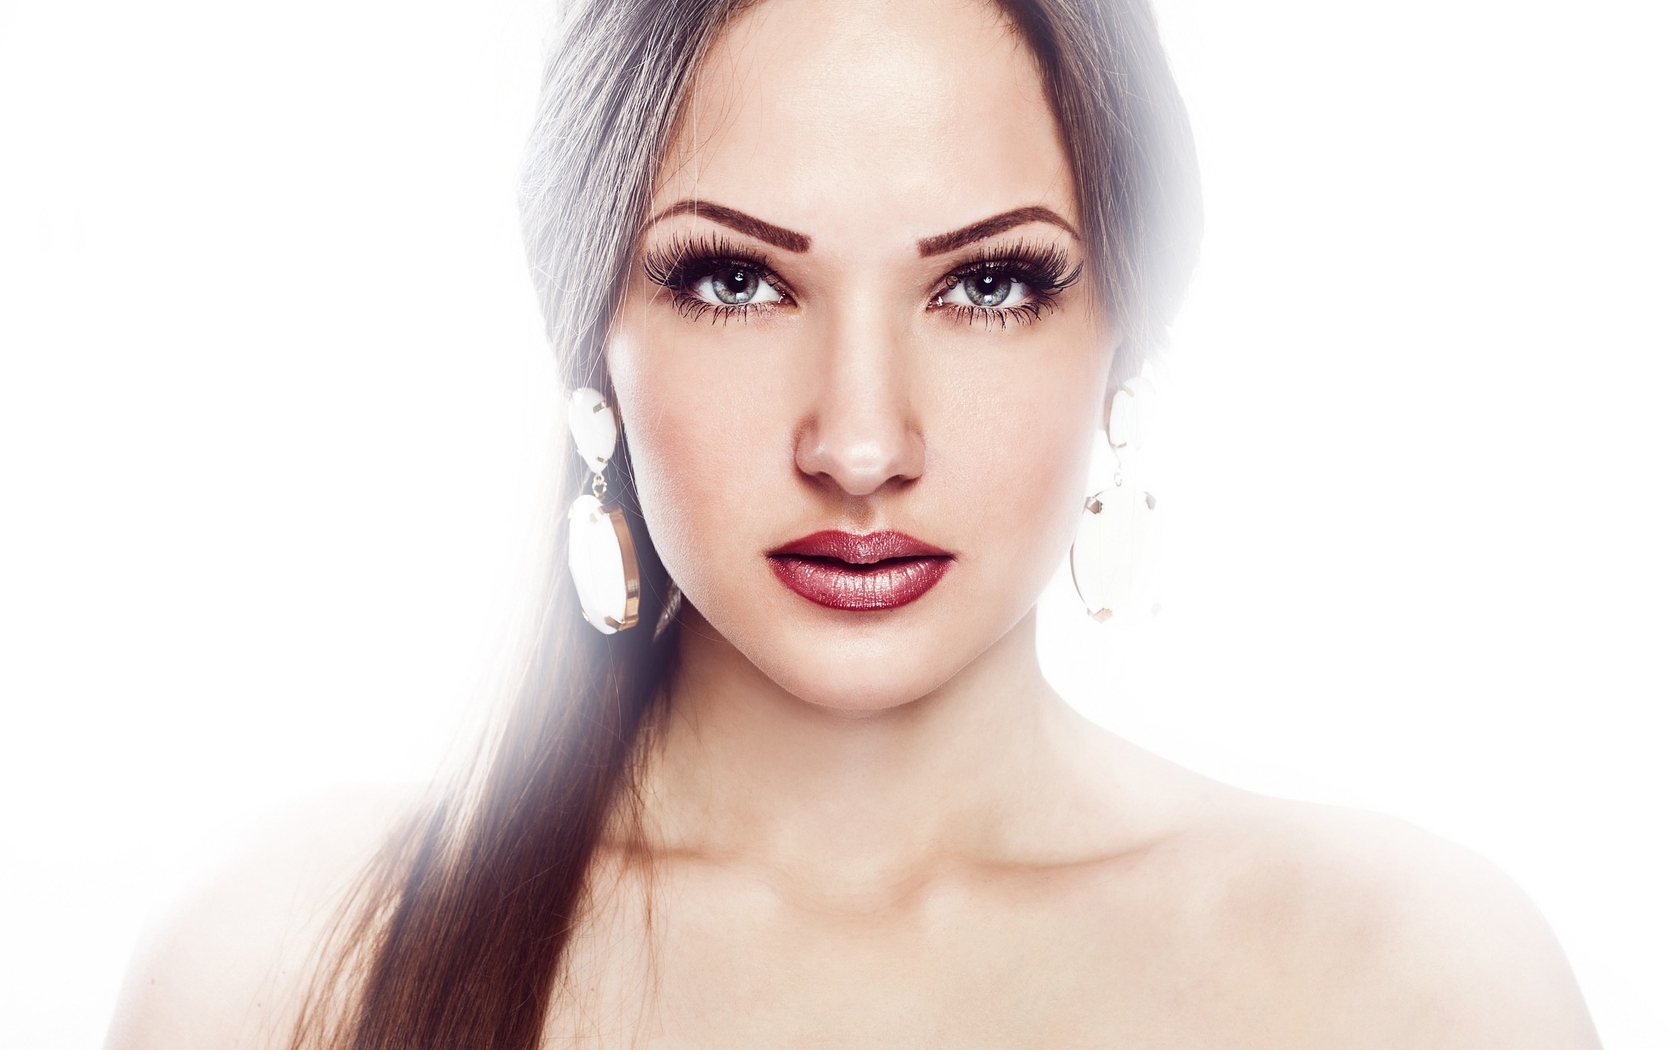 Image: Girl, face, makeup, earrings, eyes, brightness